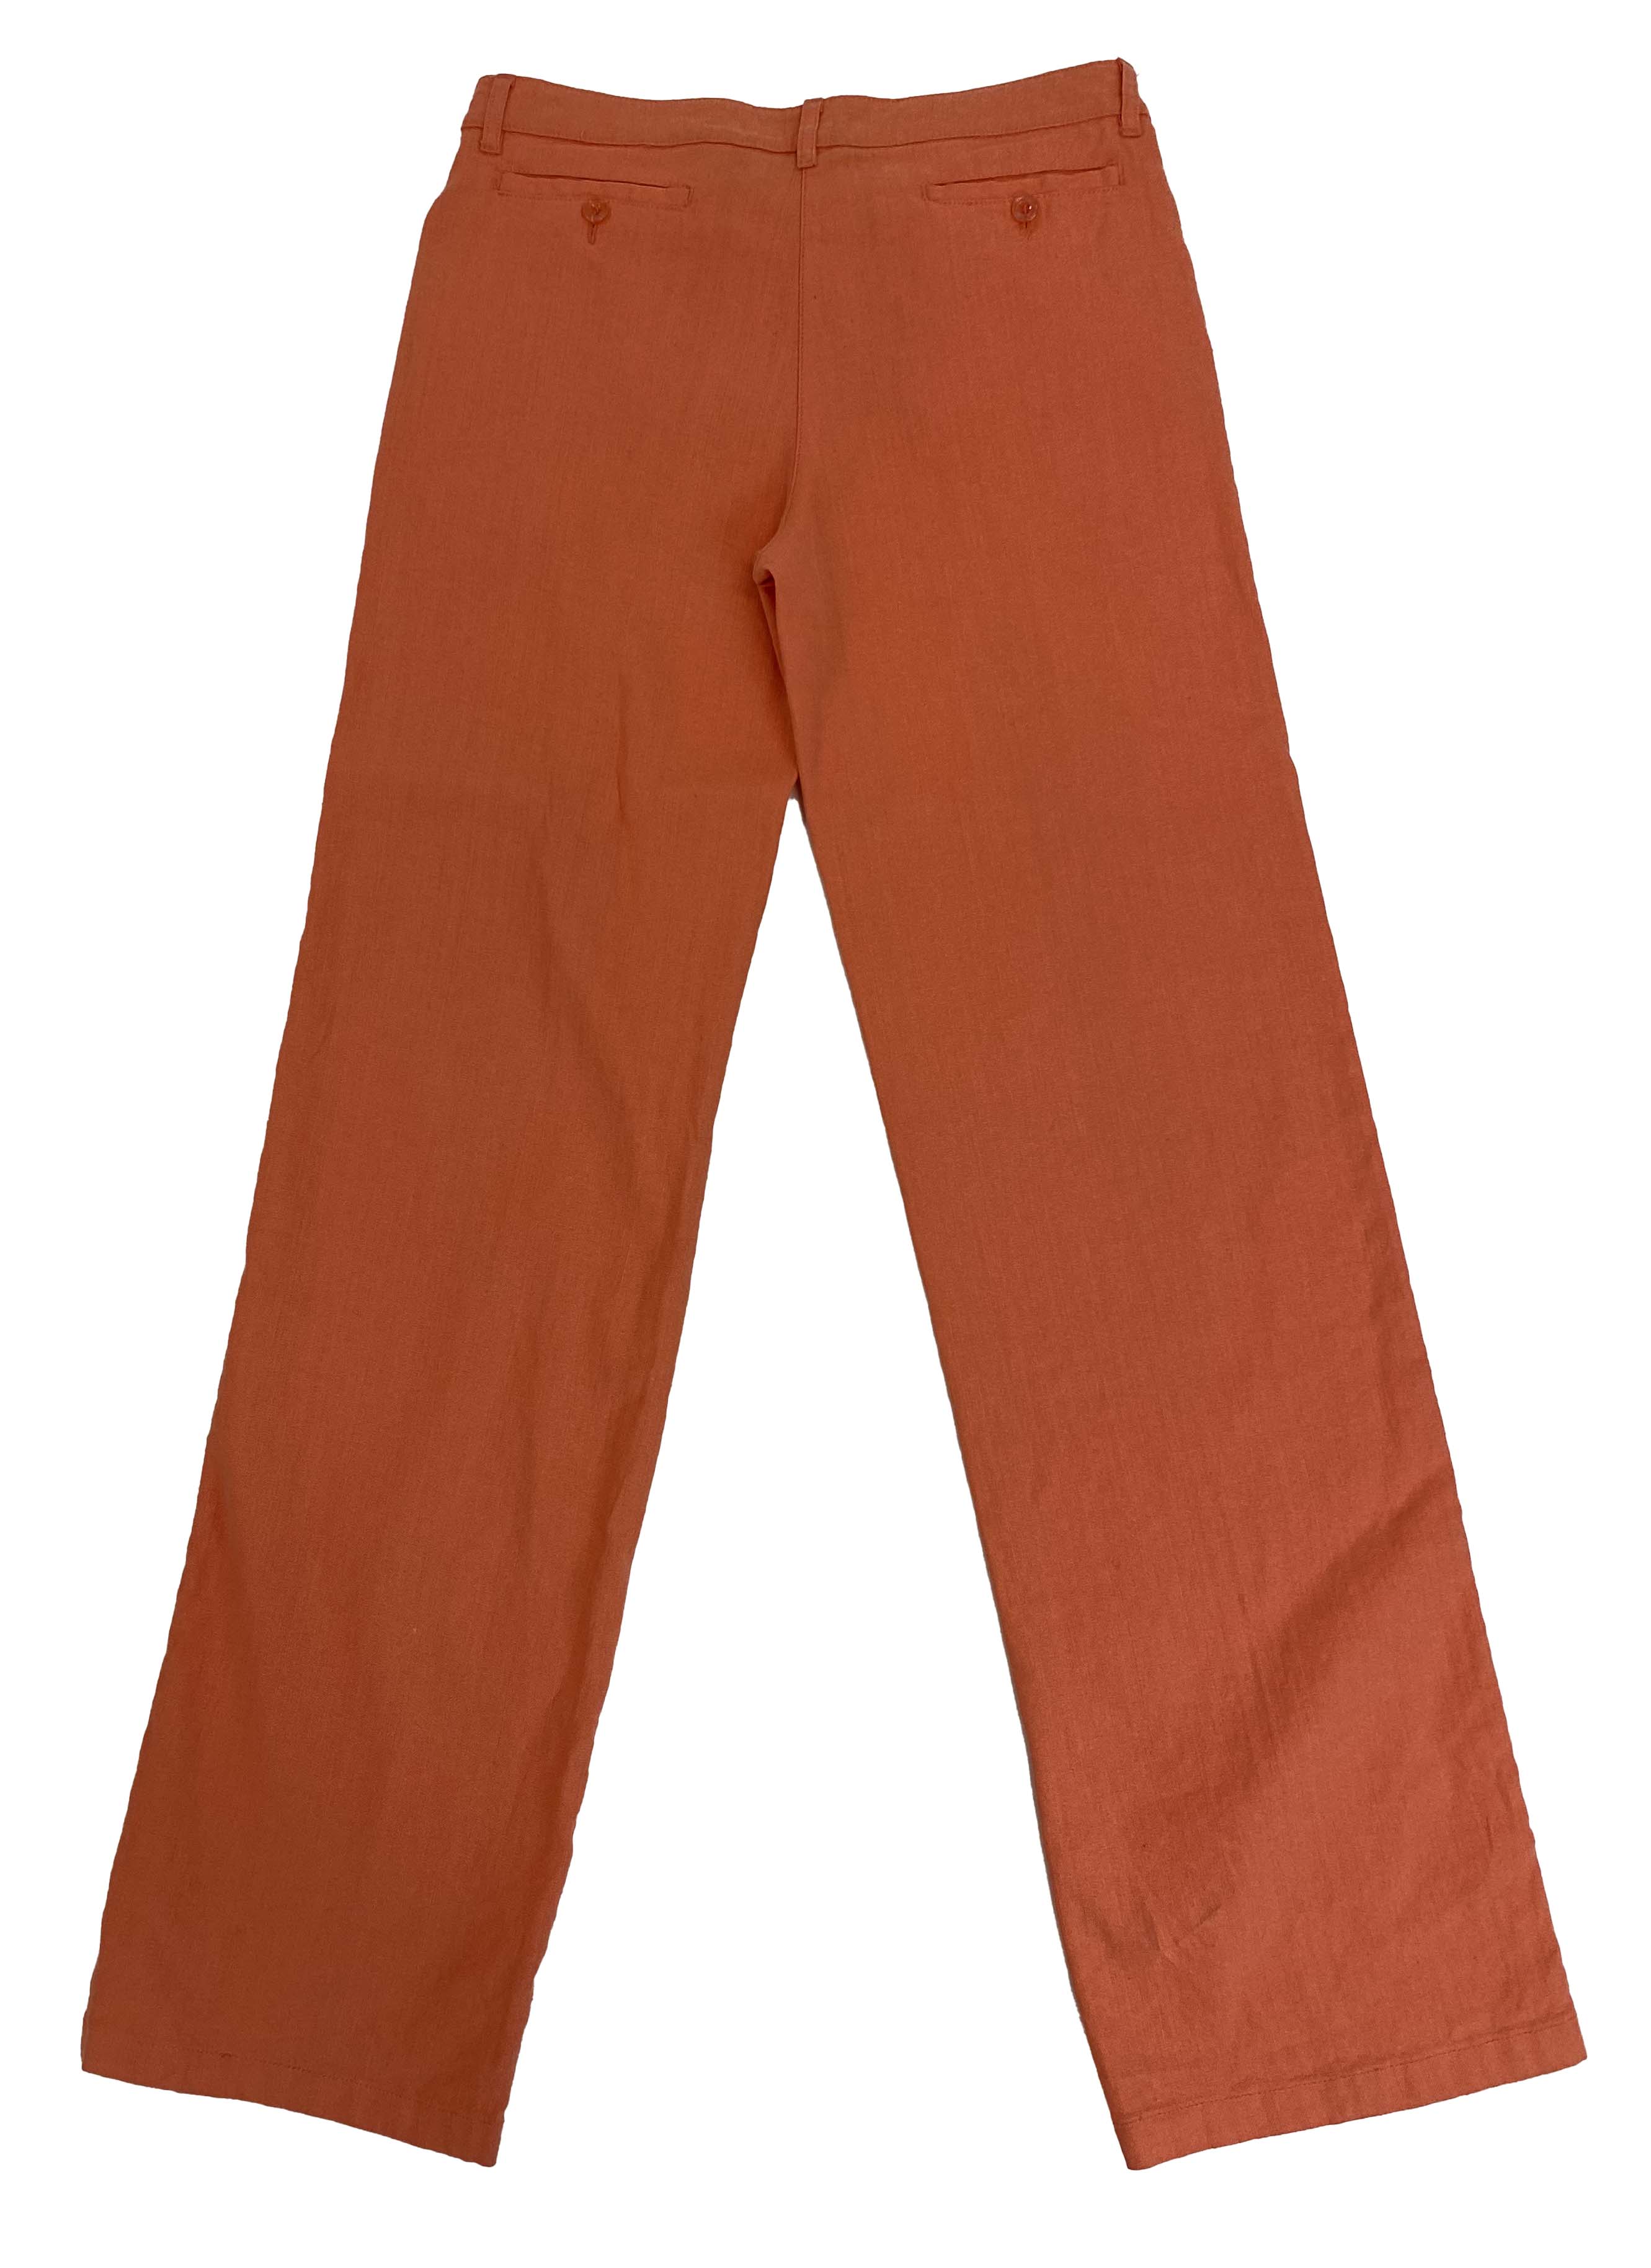 ARMANI JEANS Orange Trousers